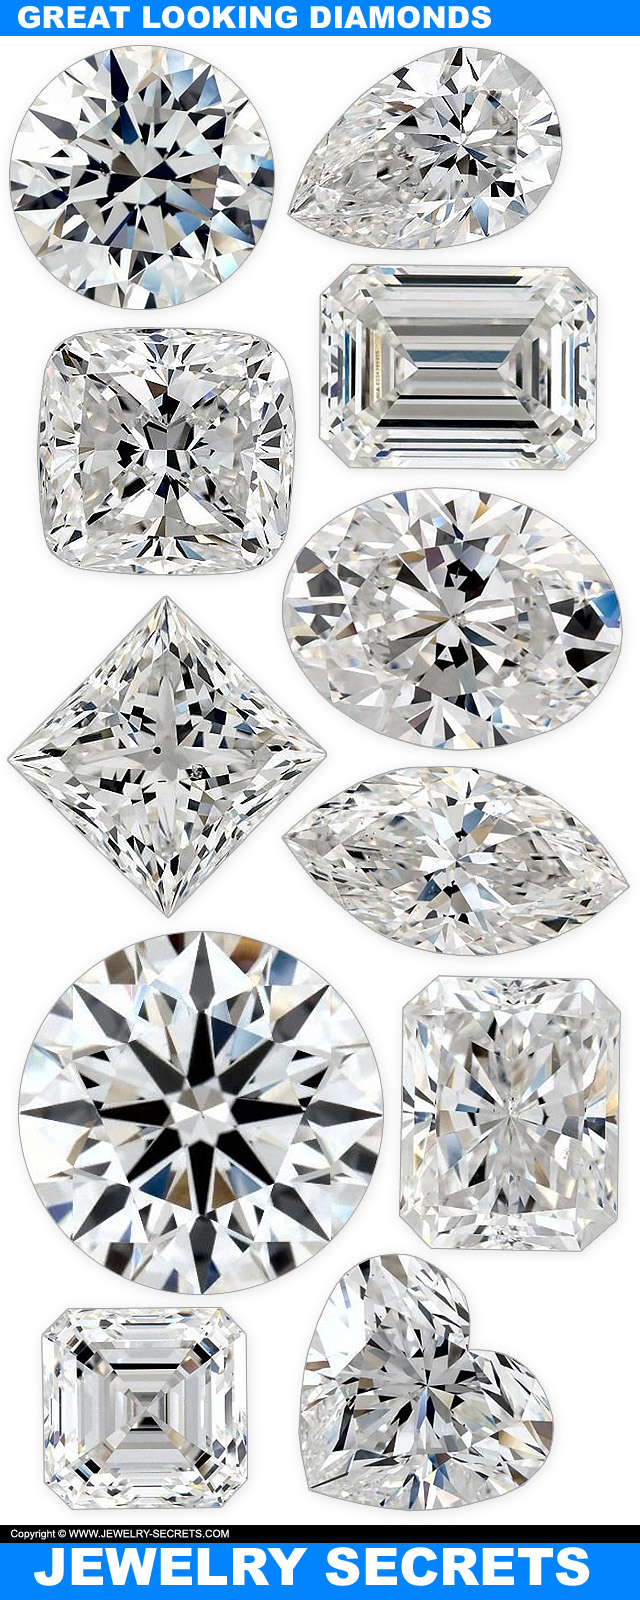 Great Looking Diamonds